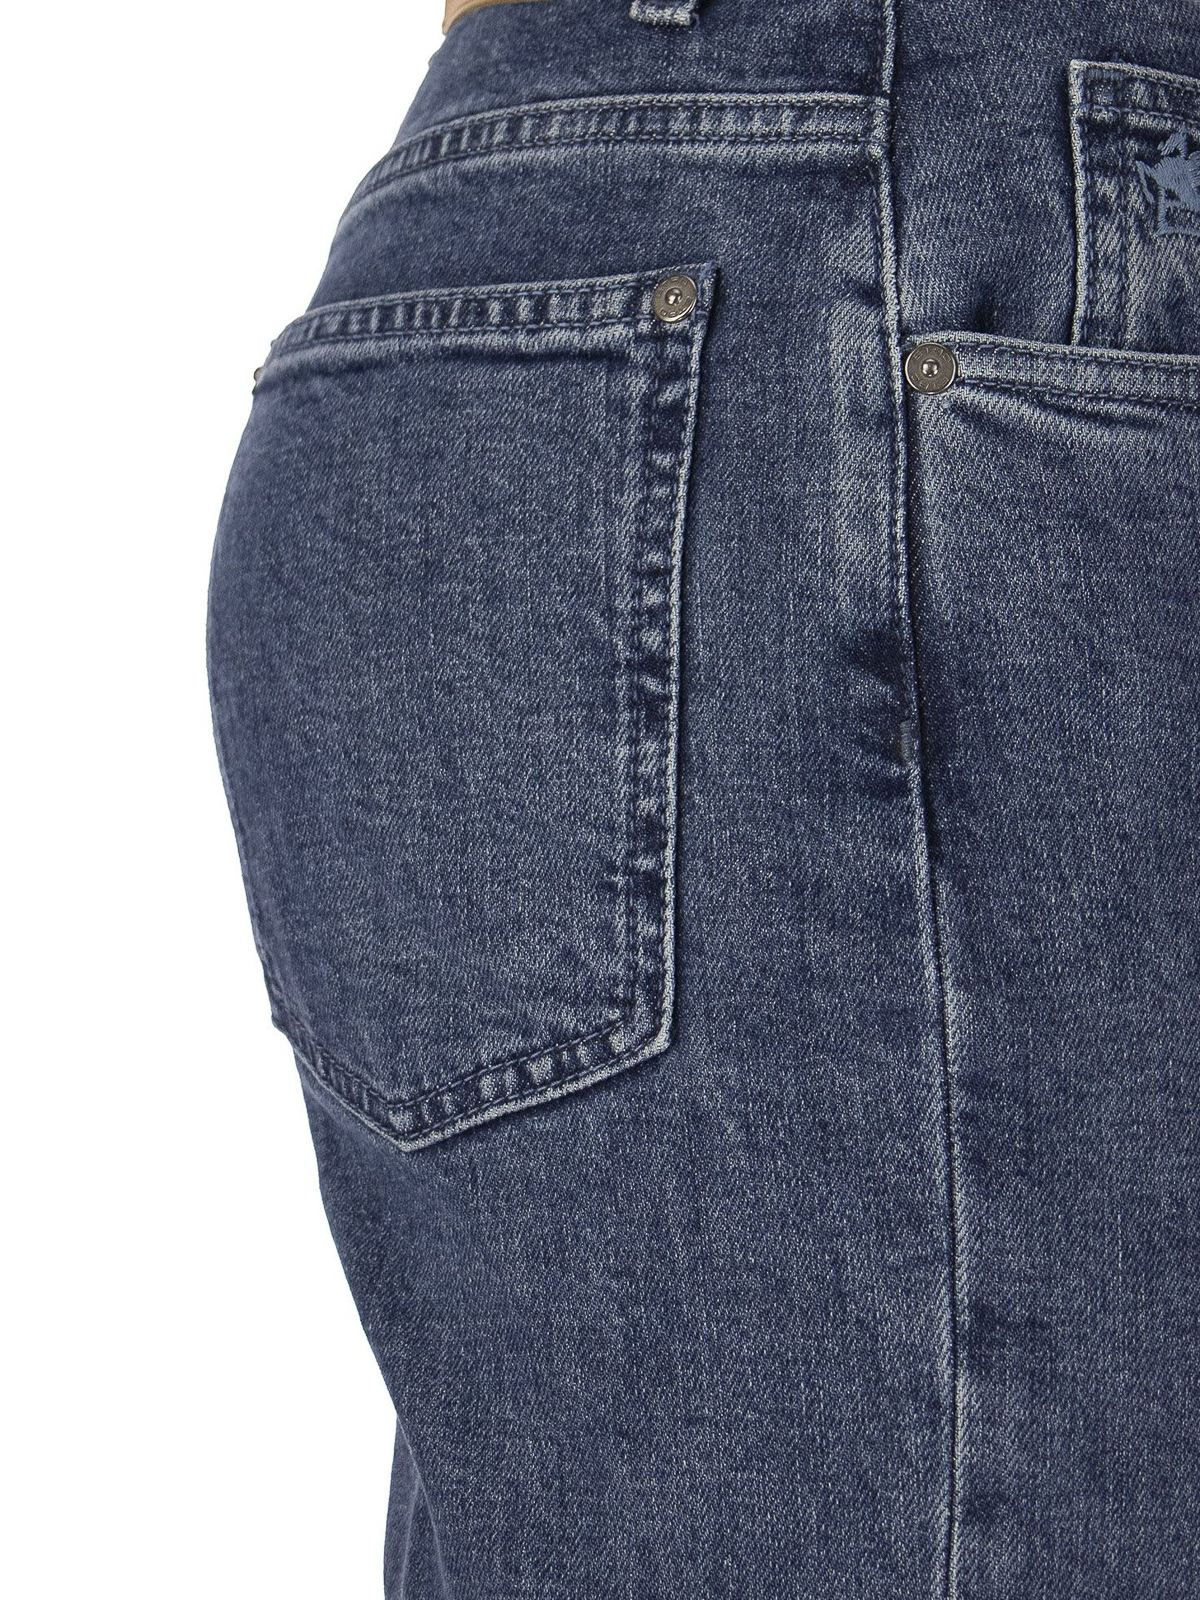 Etro - Violetta jeans - flared jeans - 144549453201 | Shop online at iKRIX